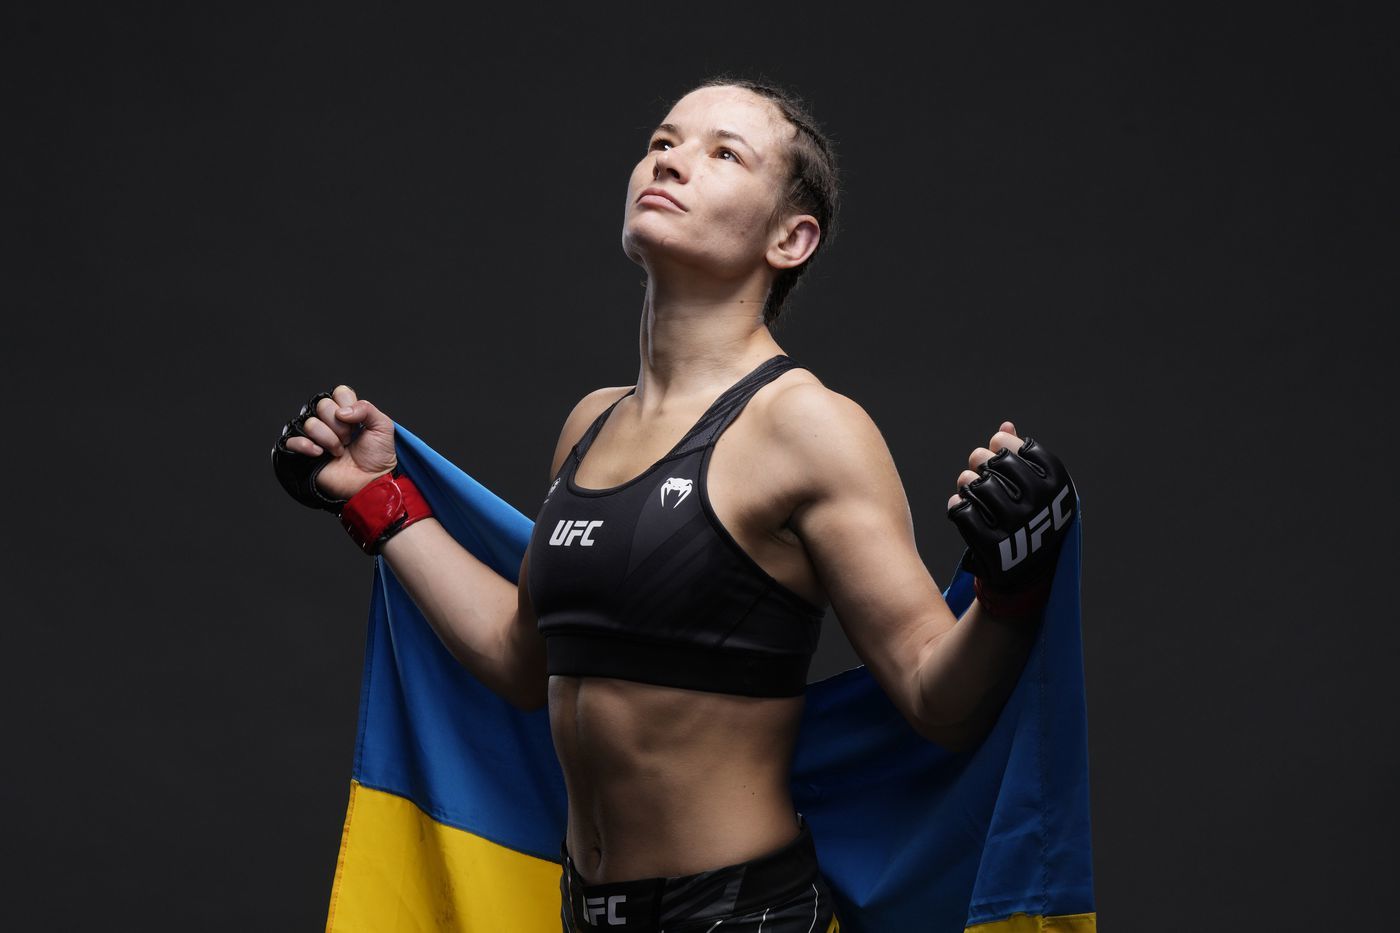 Ukrainian UFC fighter Maryna Moroz boasts her slim body in a swimsuit